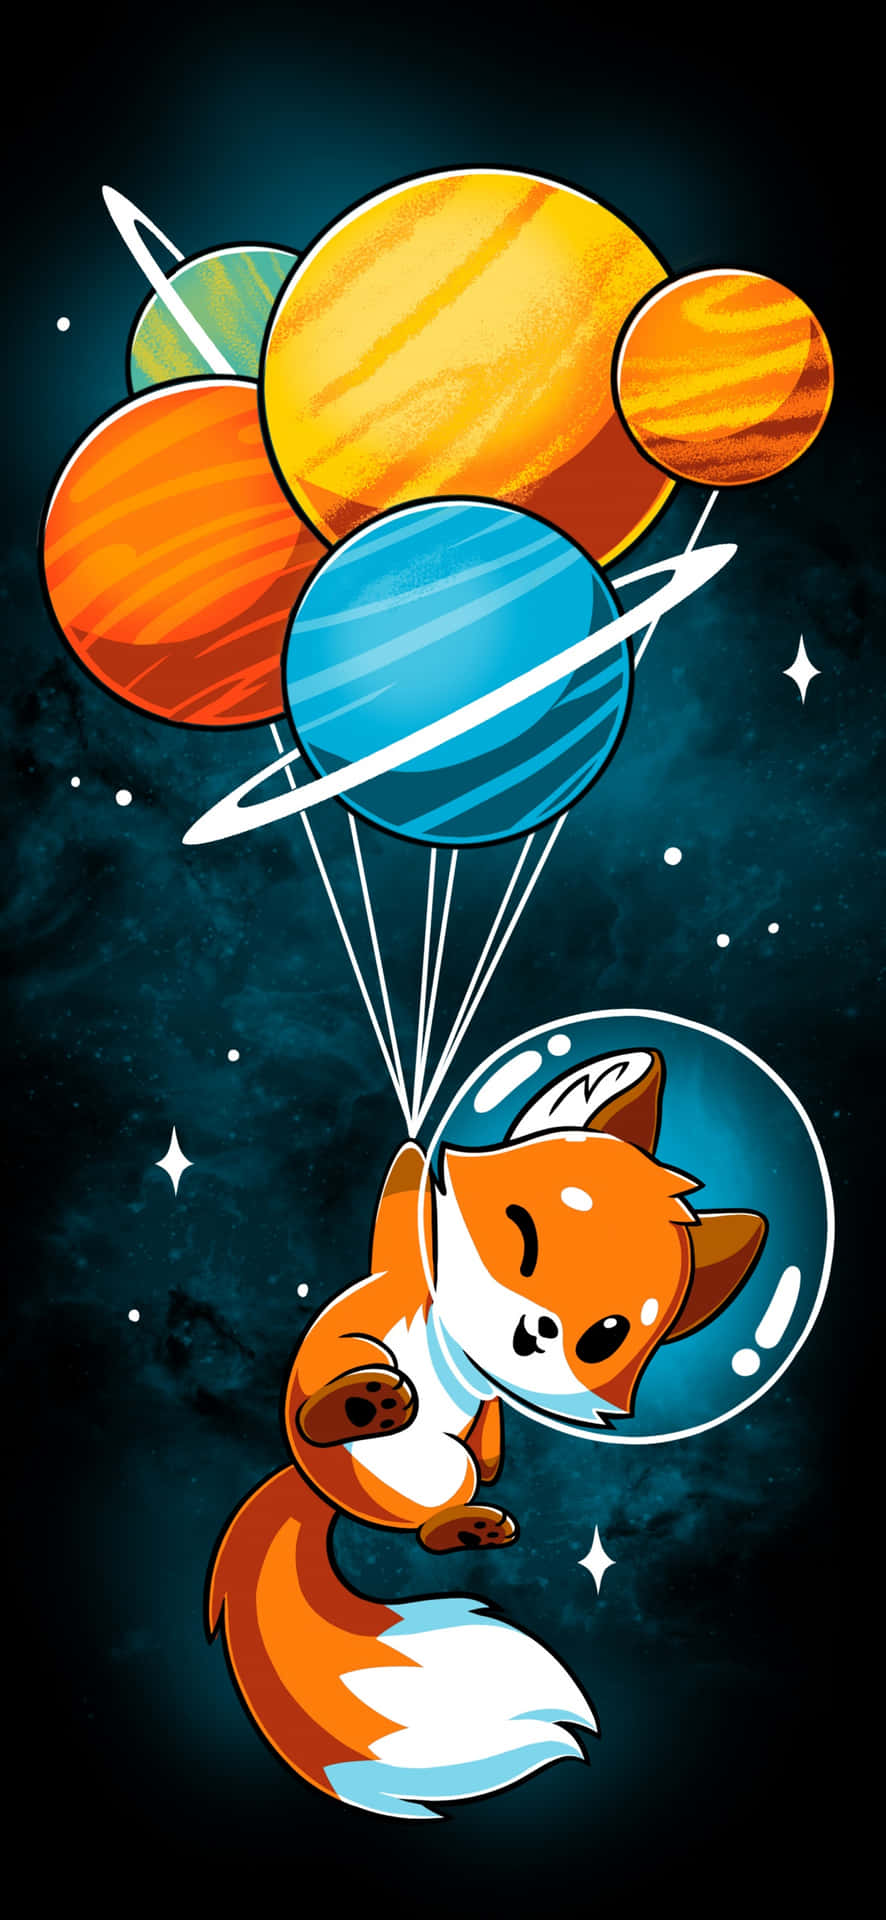 Cosmic Fox Balloon Adventure.jpg Wallpaper